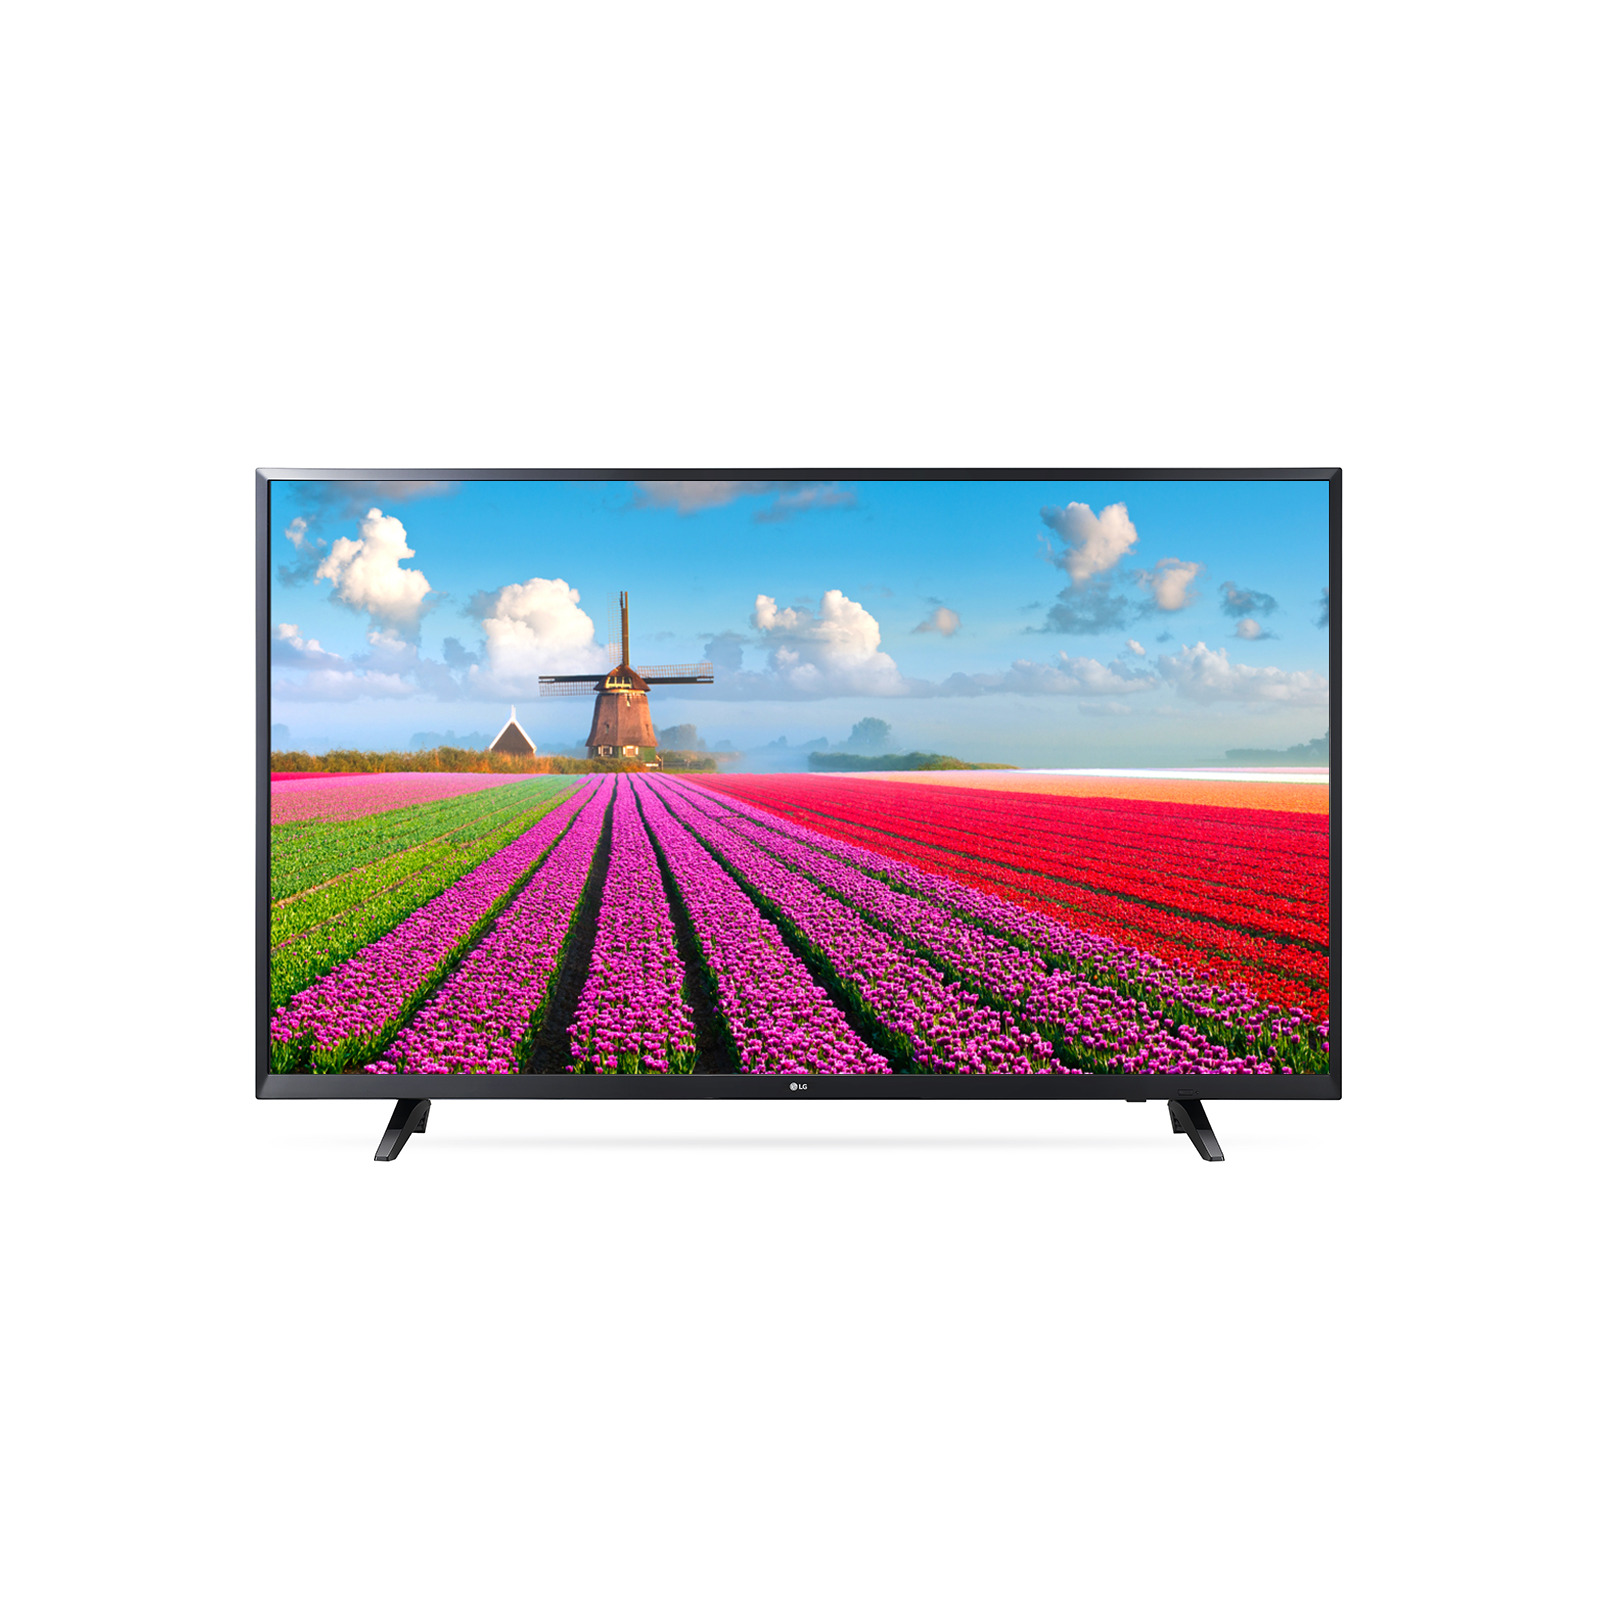 Последняя версия телевизора lg. LG 32lj500v. Телевизор led LG 32lj500v. Телевизор LG 32lj500v led (2017. Телевизор LG 32lj622v.